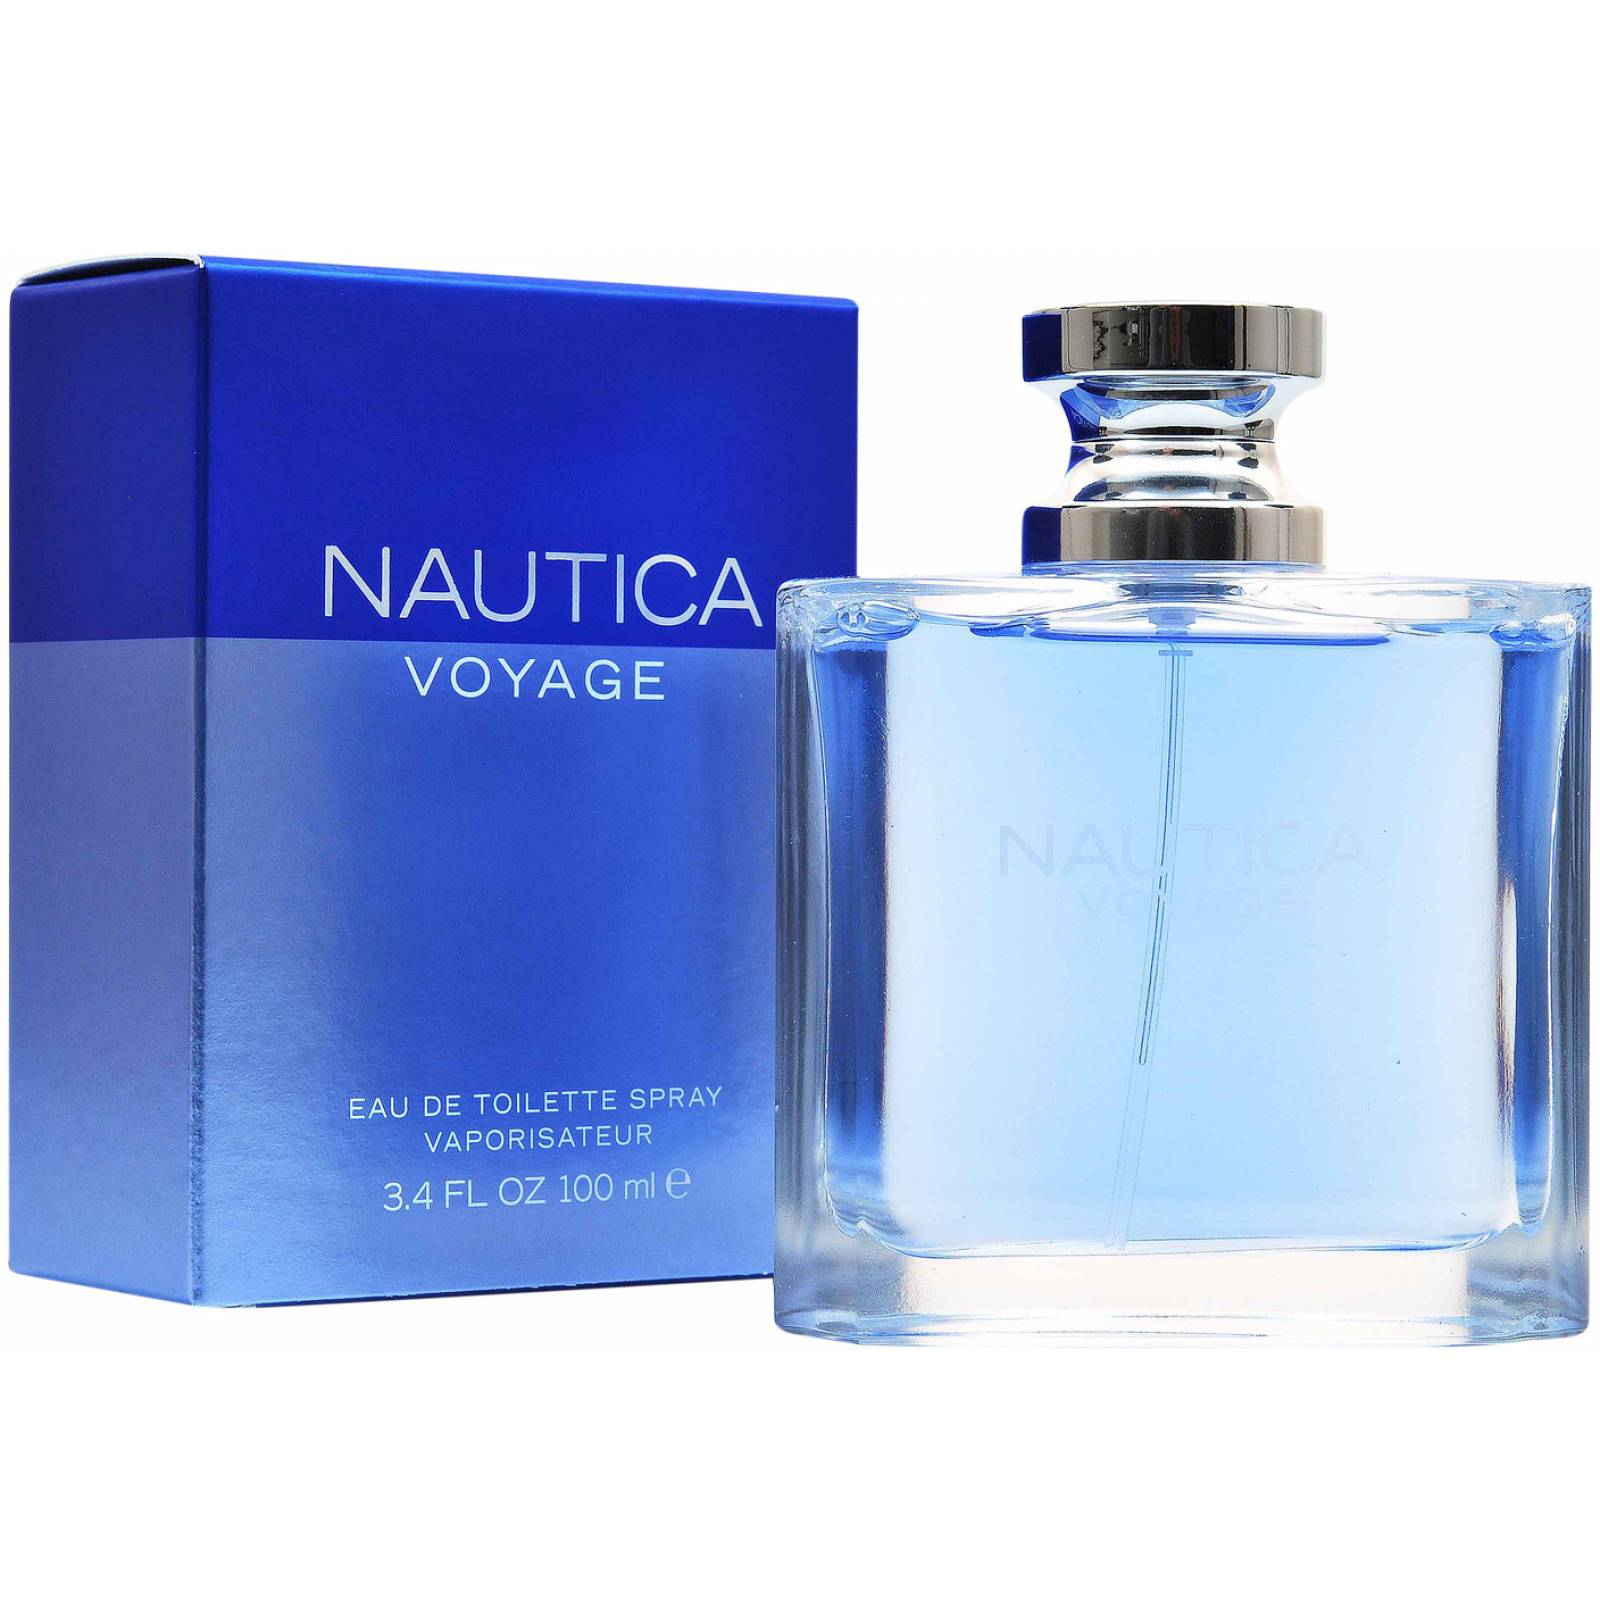 Paquete 2 Perfumes Nautica Voyage + Nautica Classic edt 100ml